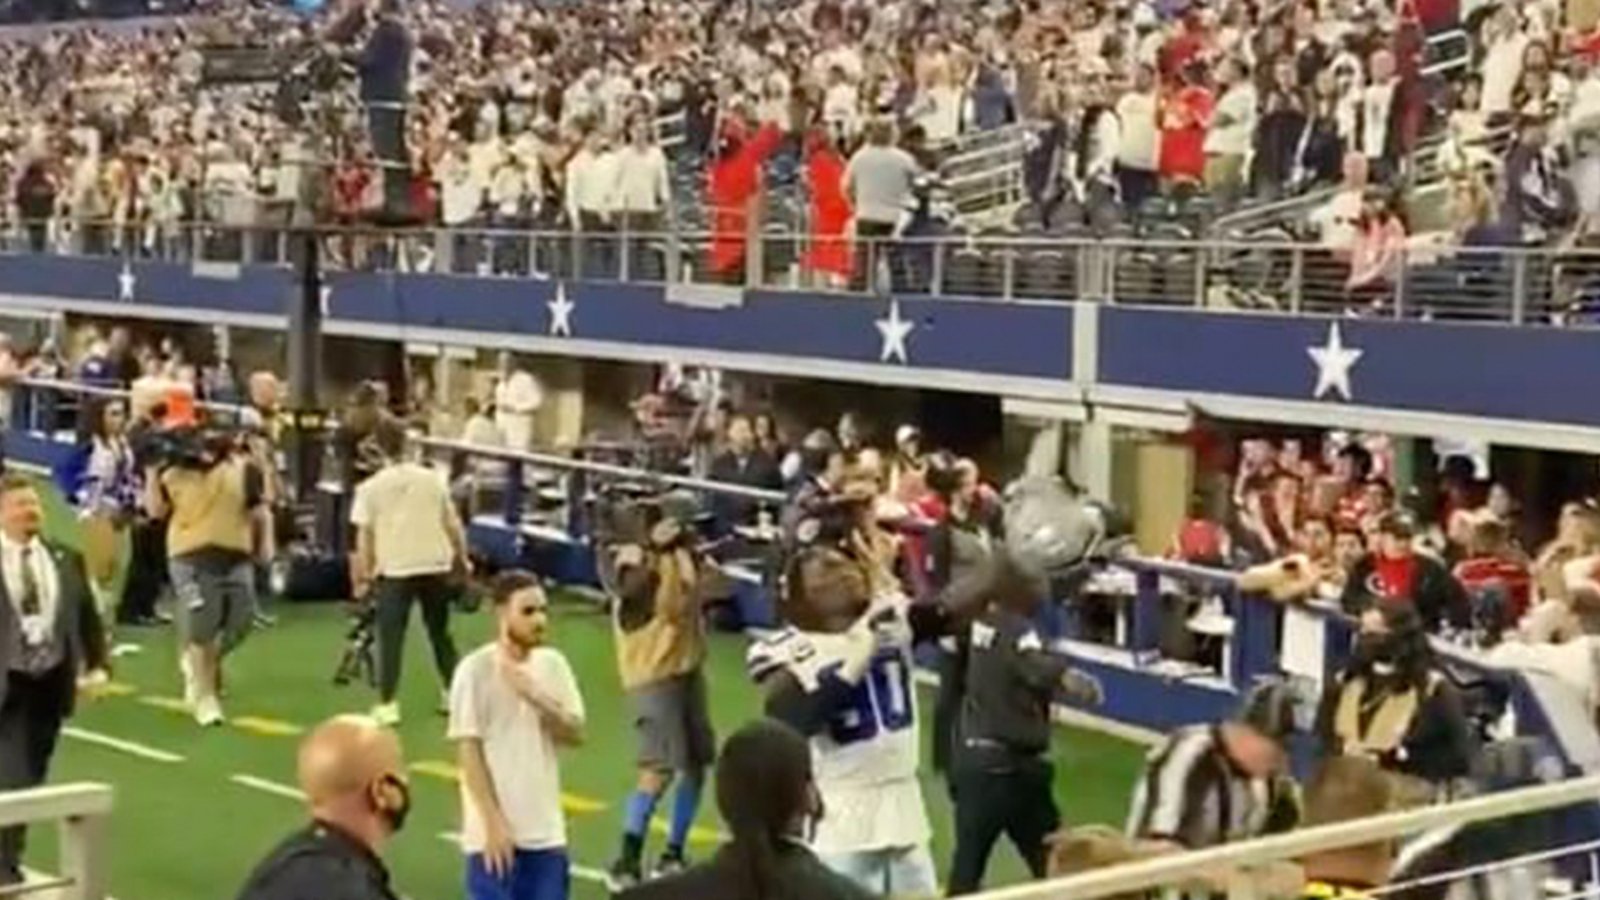 LISTEN: Dallas Cowboys commentators rip fans throwing garbage 